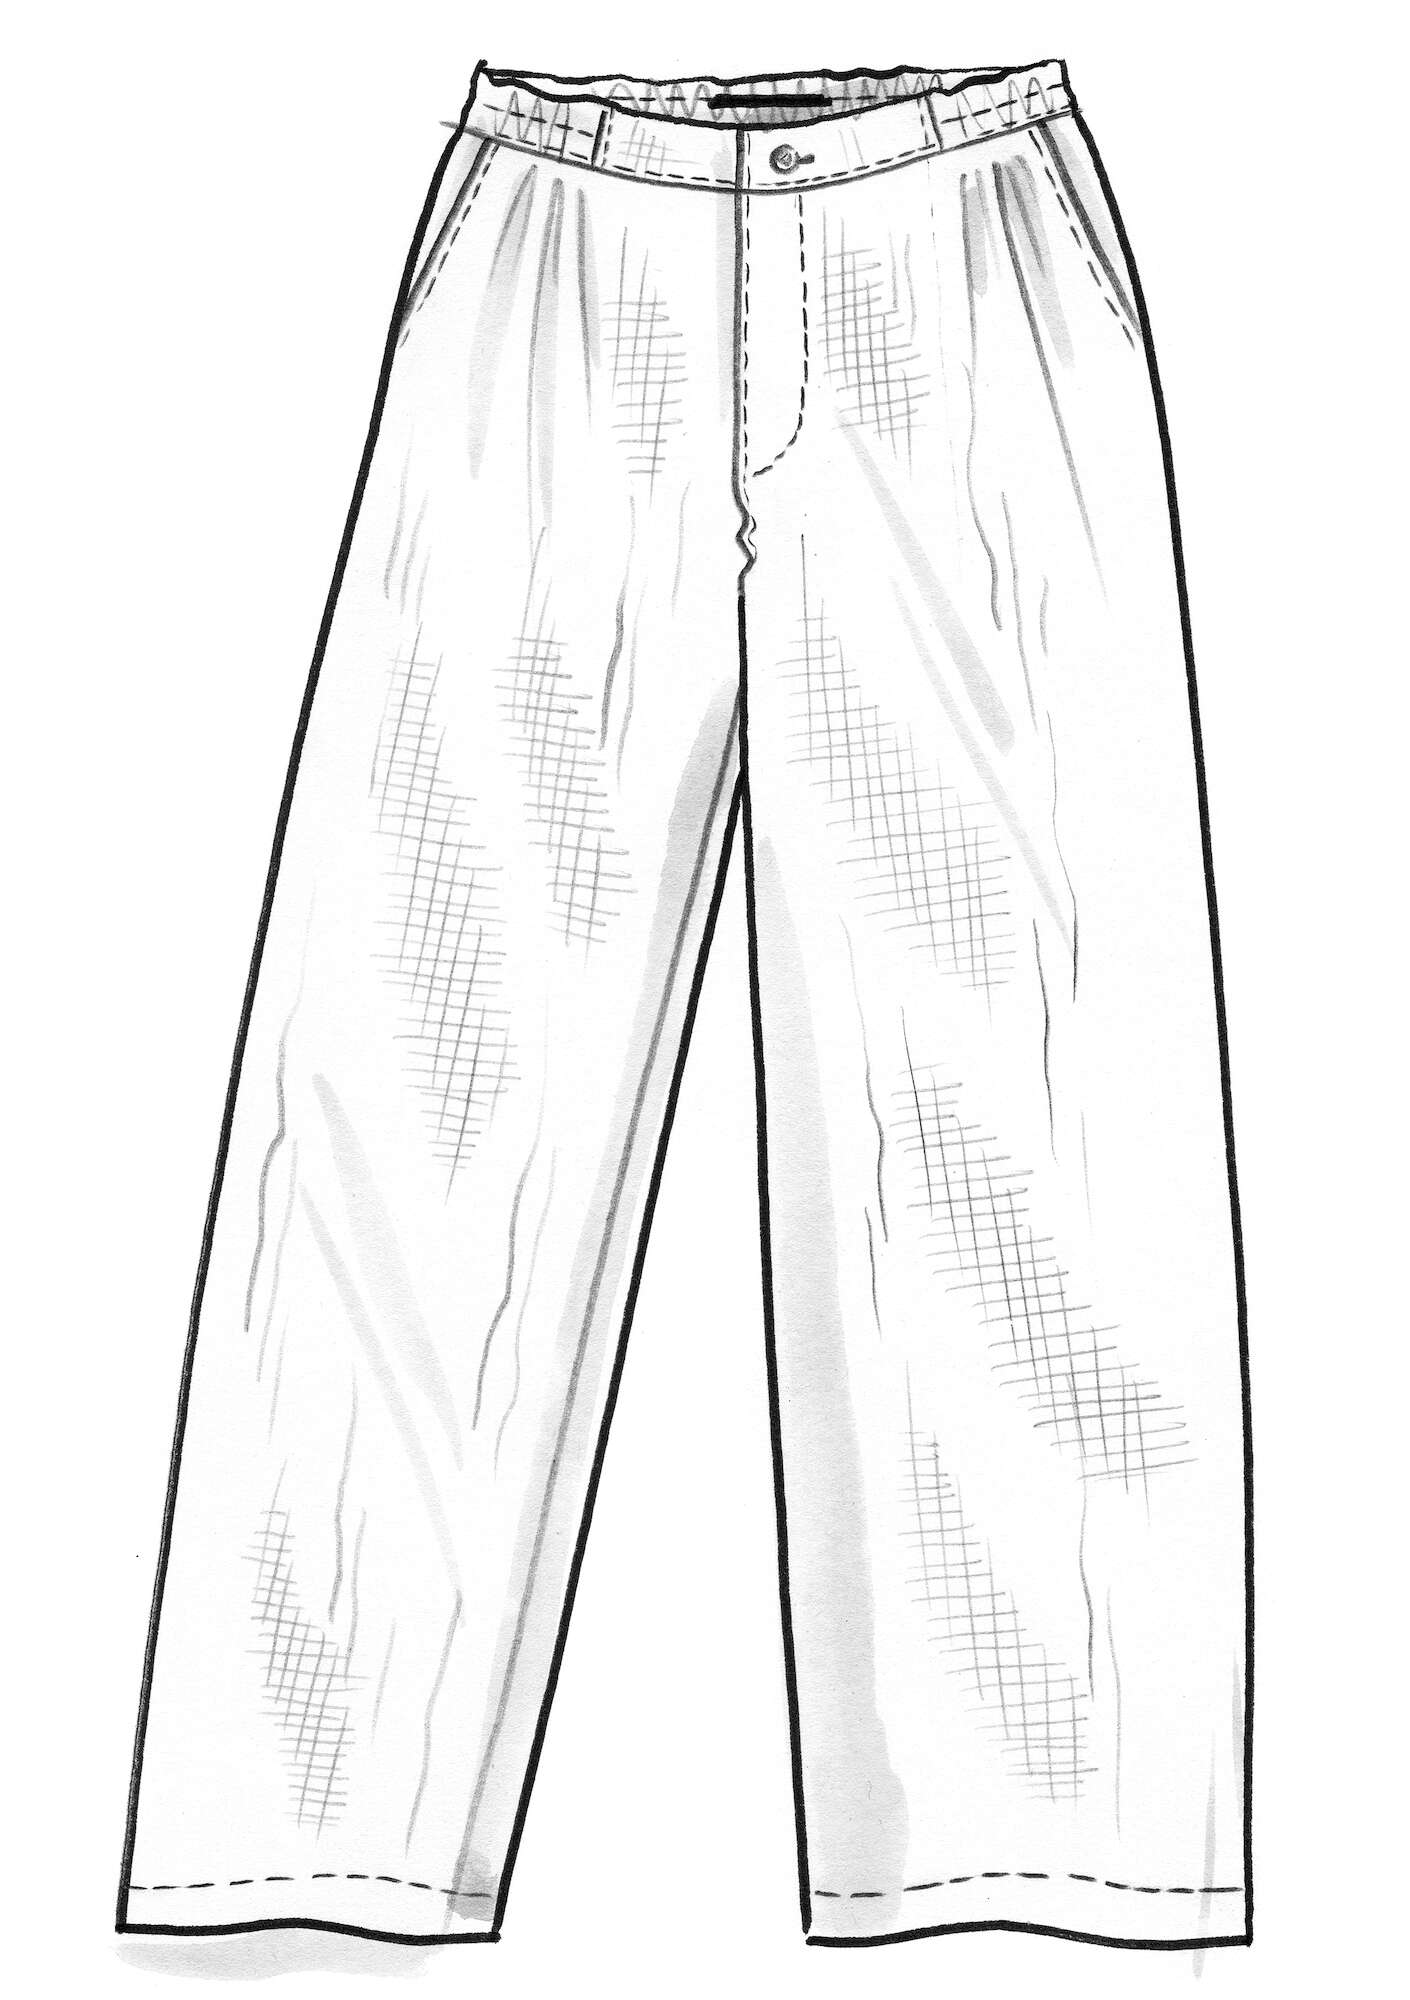 Woven organic cotton trousers